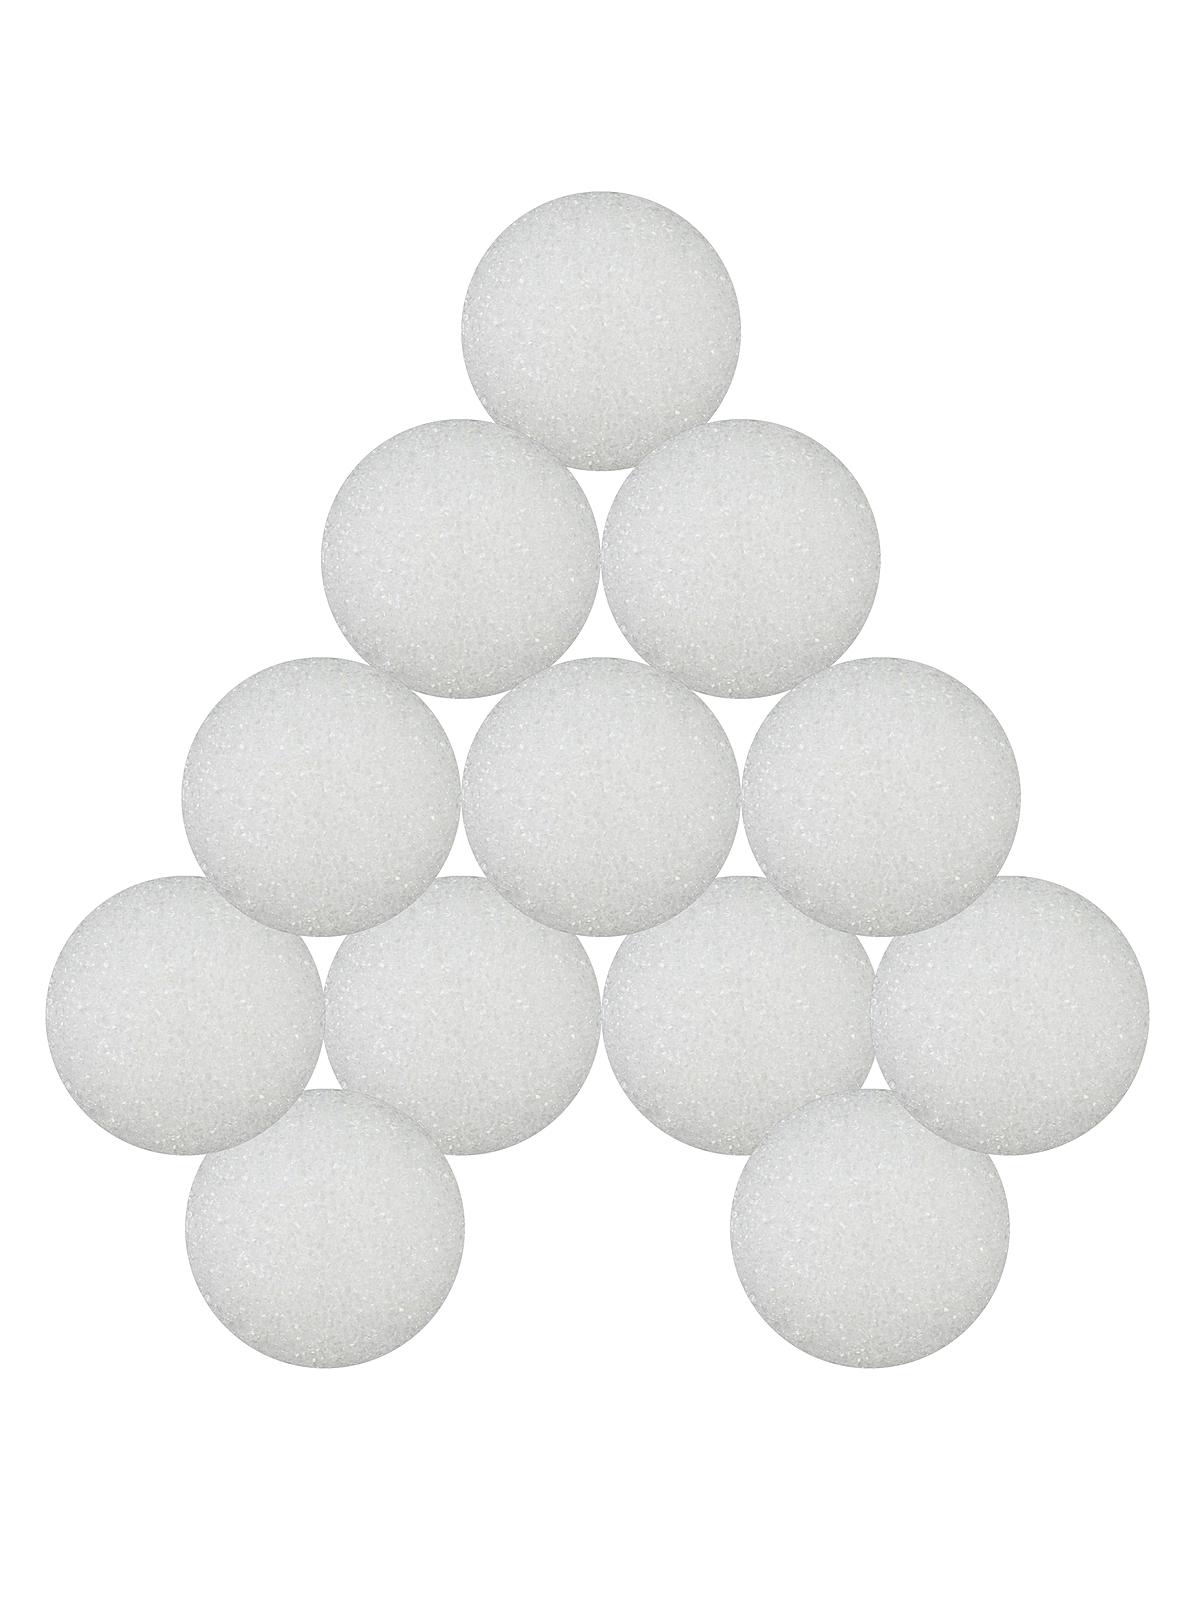 Styrofoam Snowballs 1 1 2 In. Pack Of 12